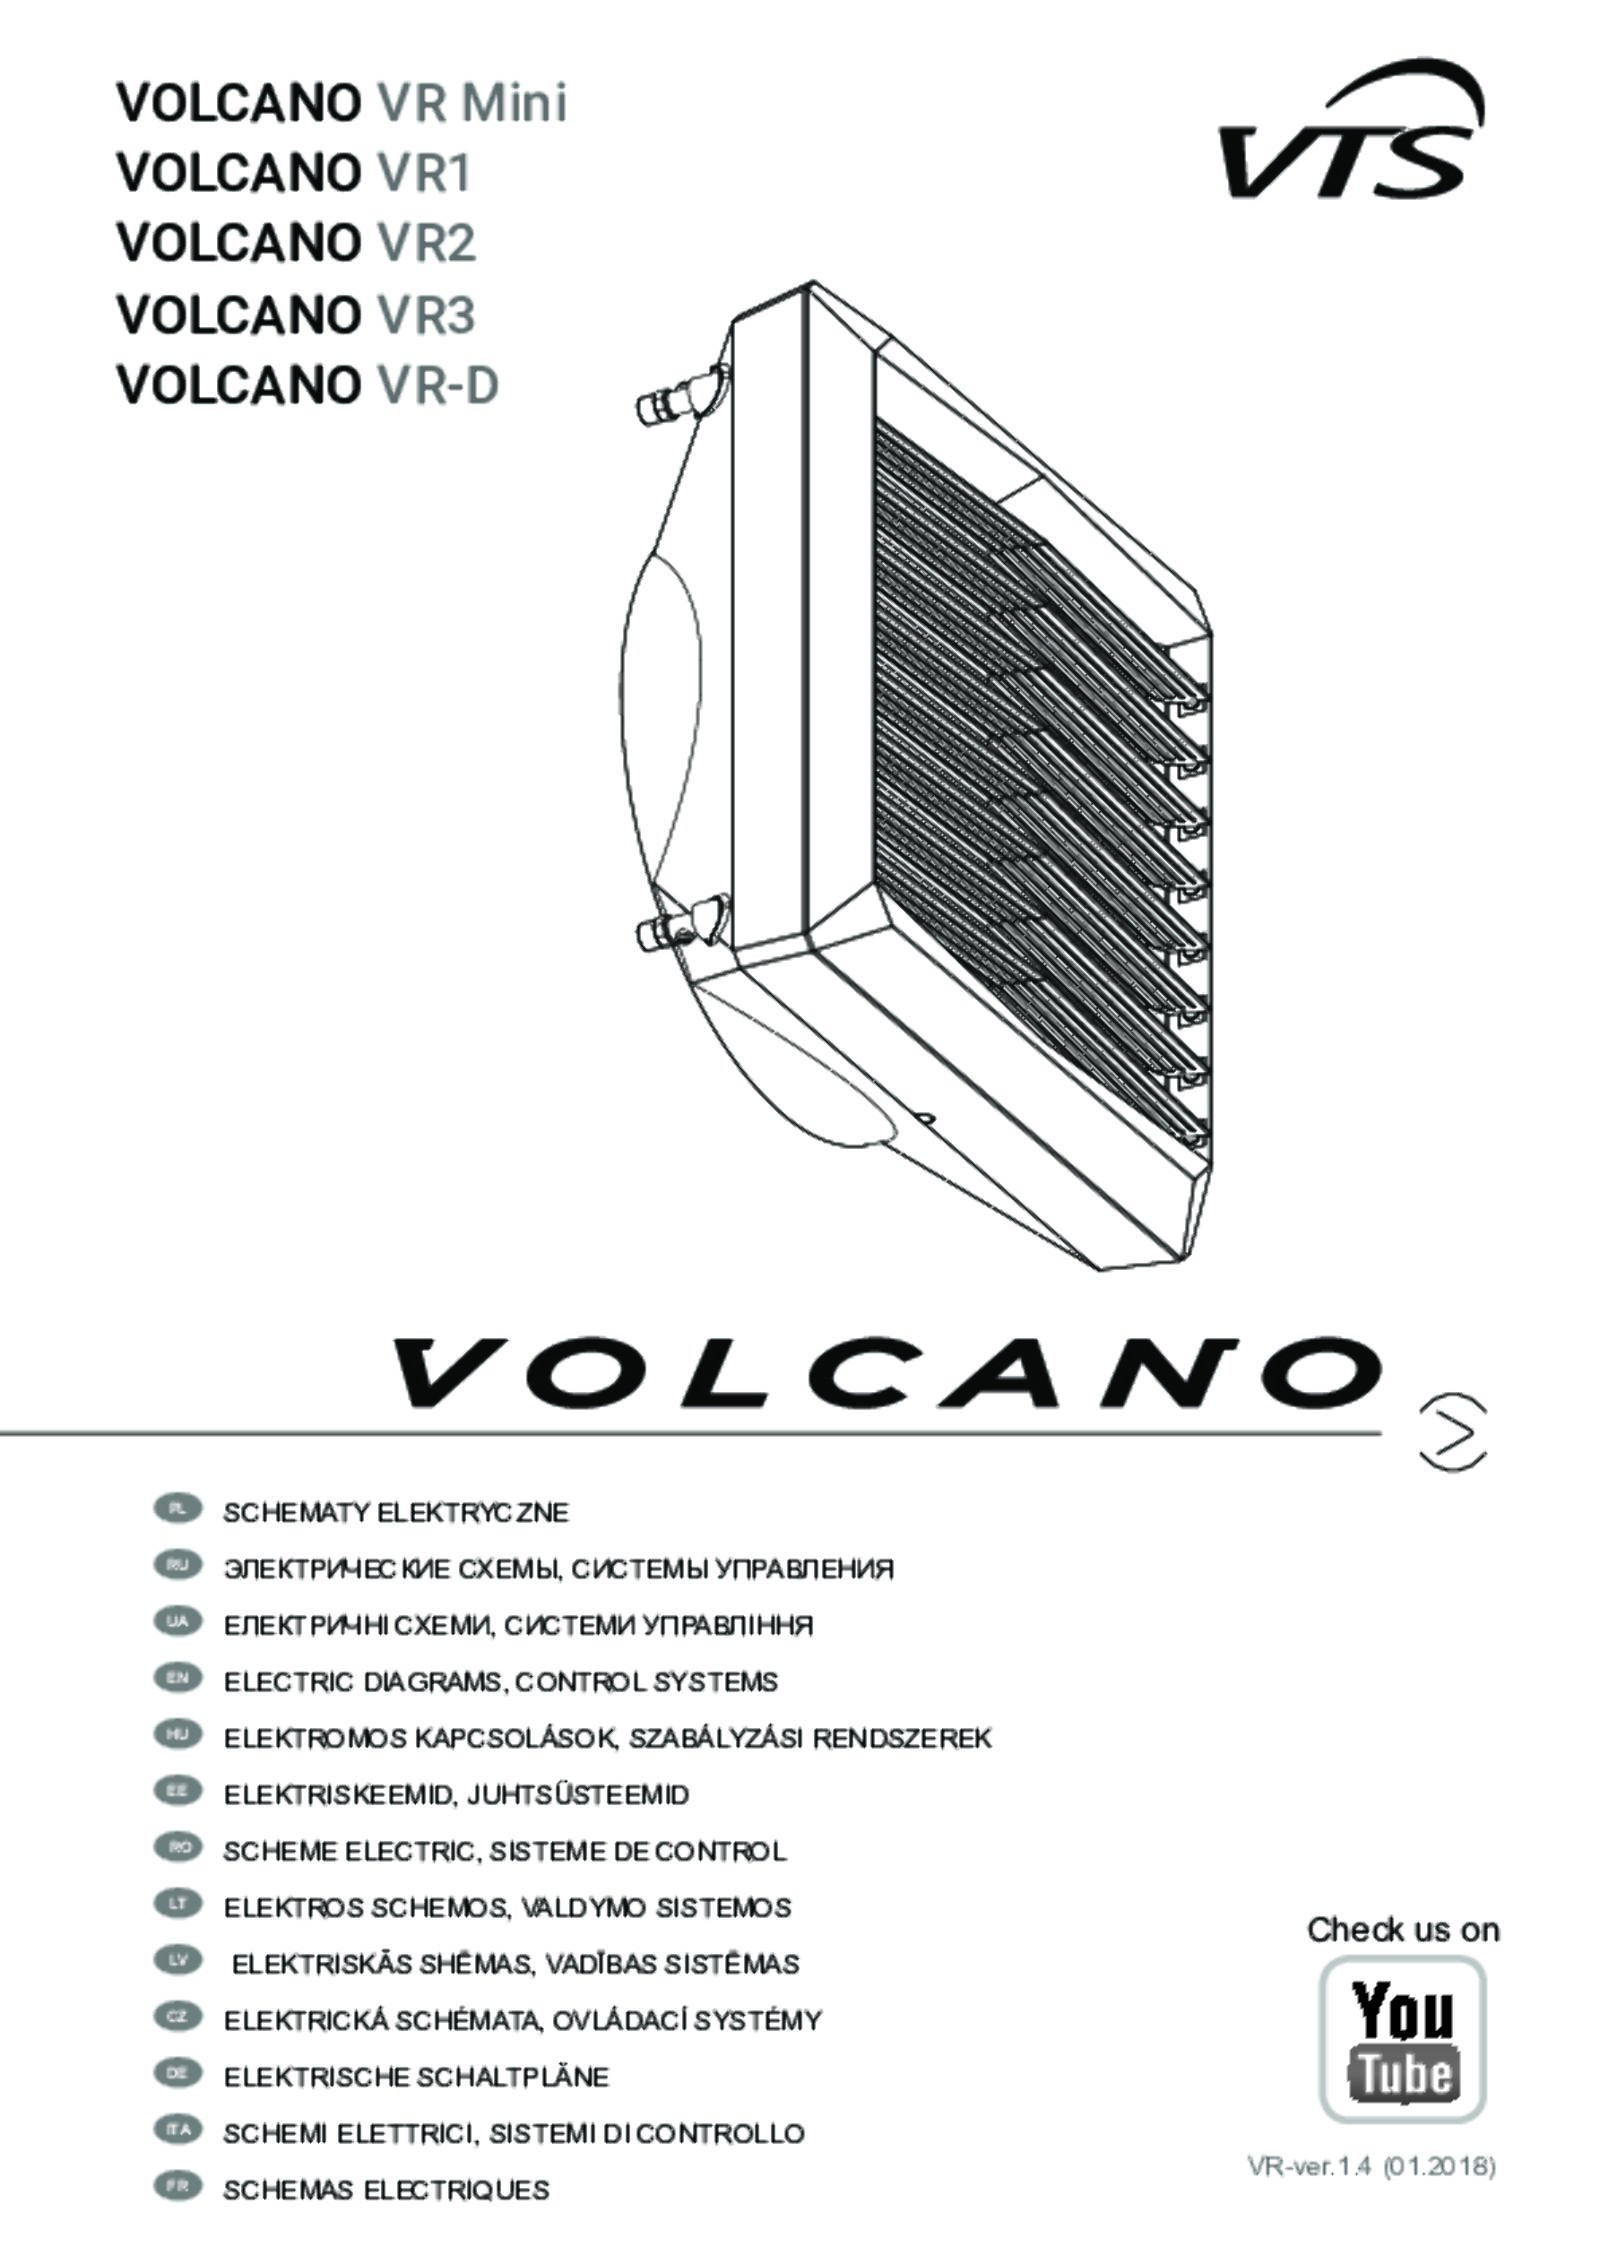 Volcano 3 ec - 1-4-0101-0444 - vts group